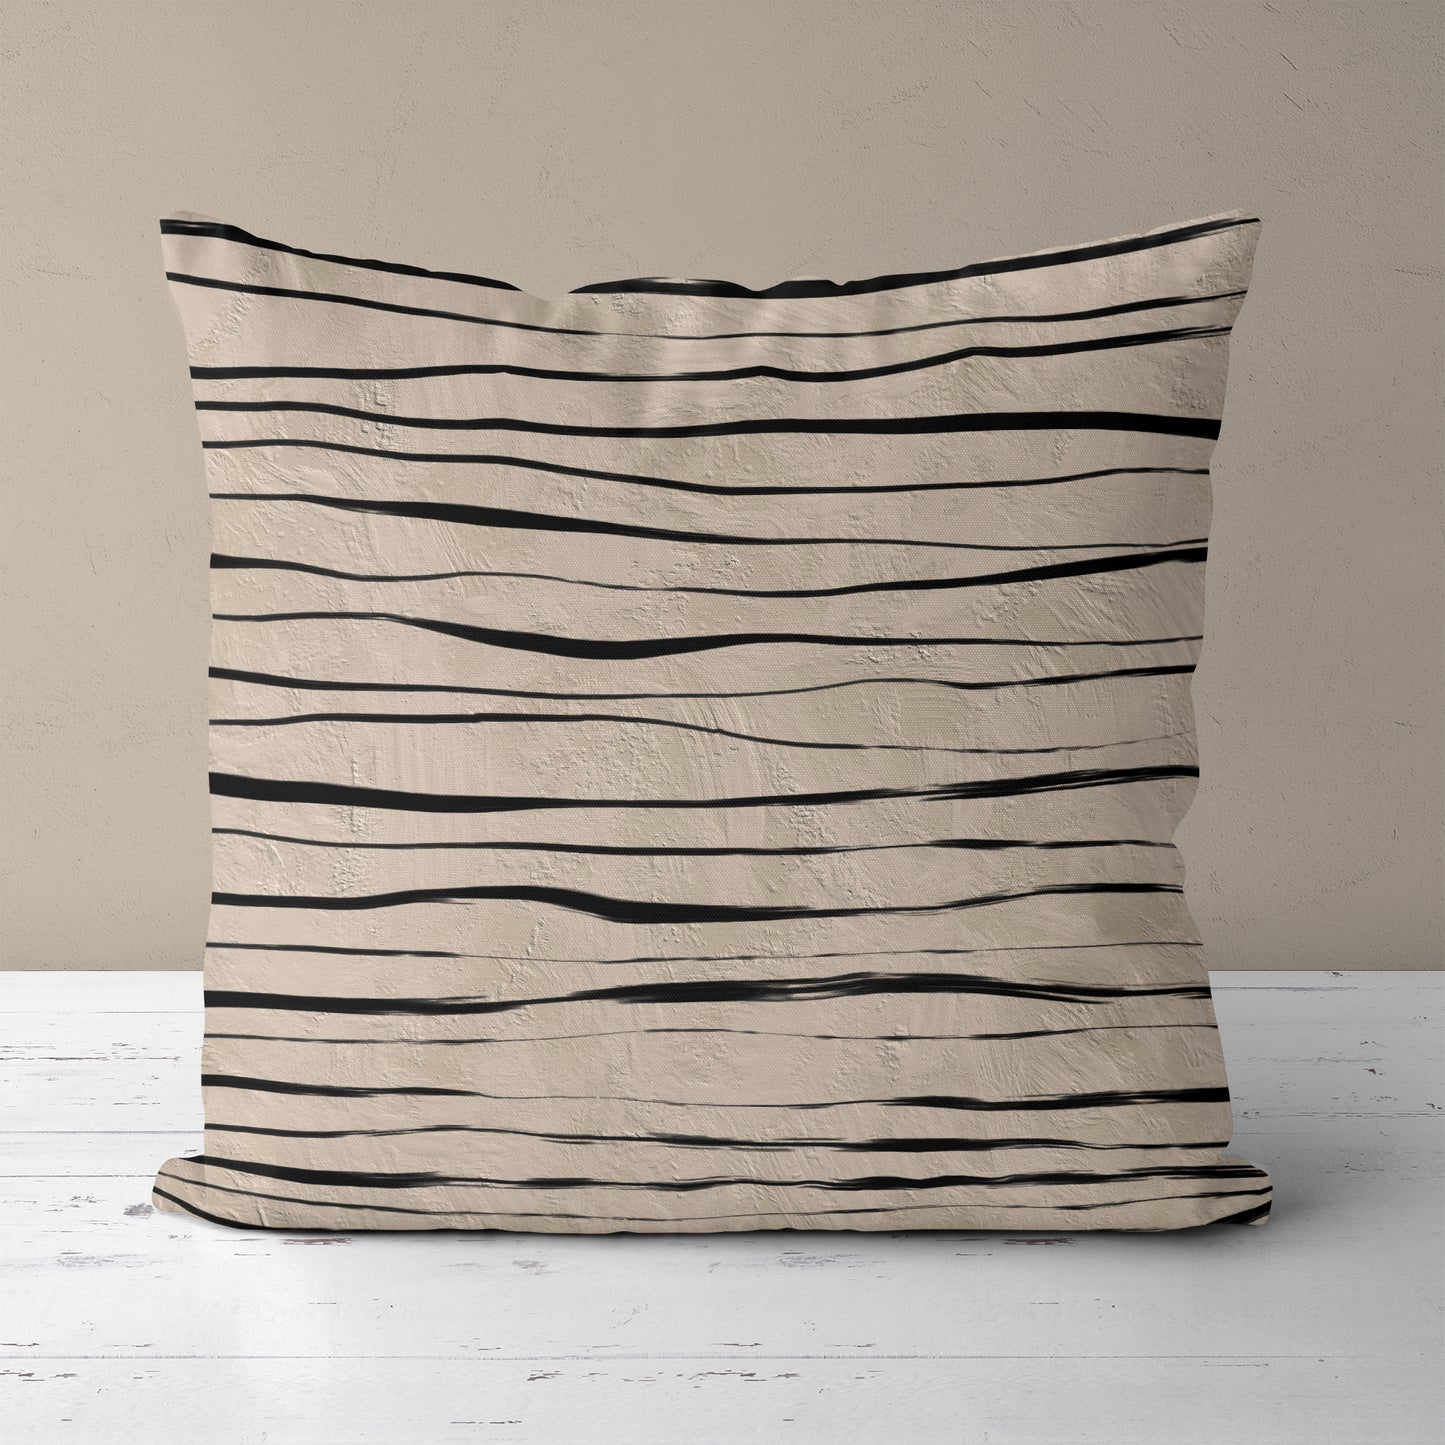 Beige Decorative Throw Pillow with Black Line Art